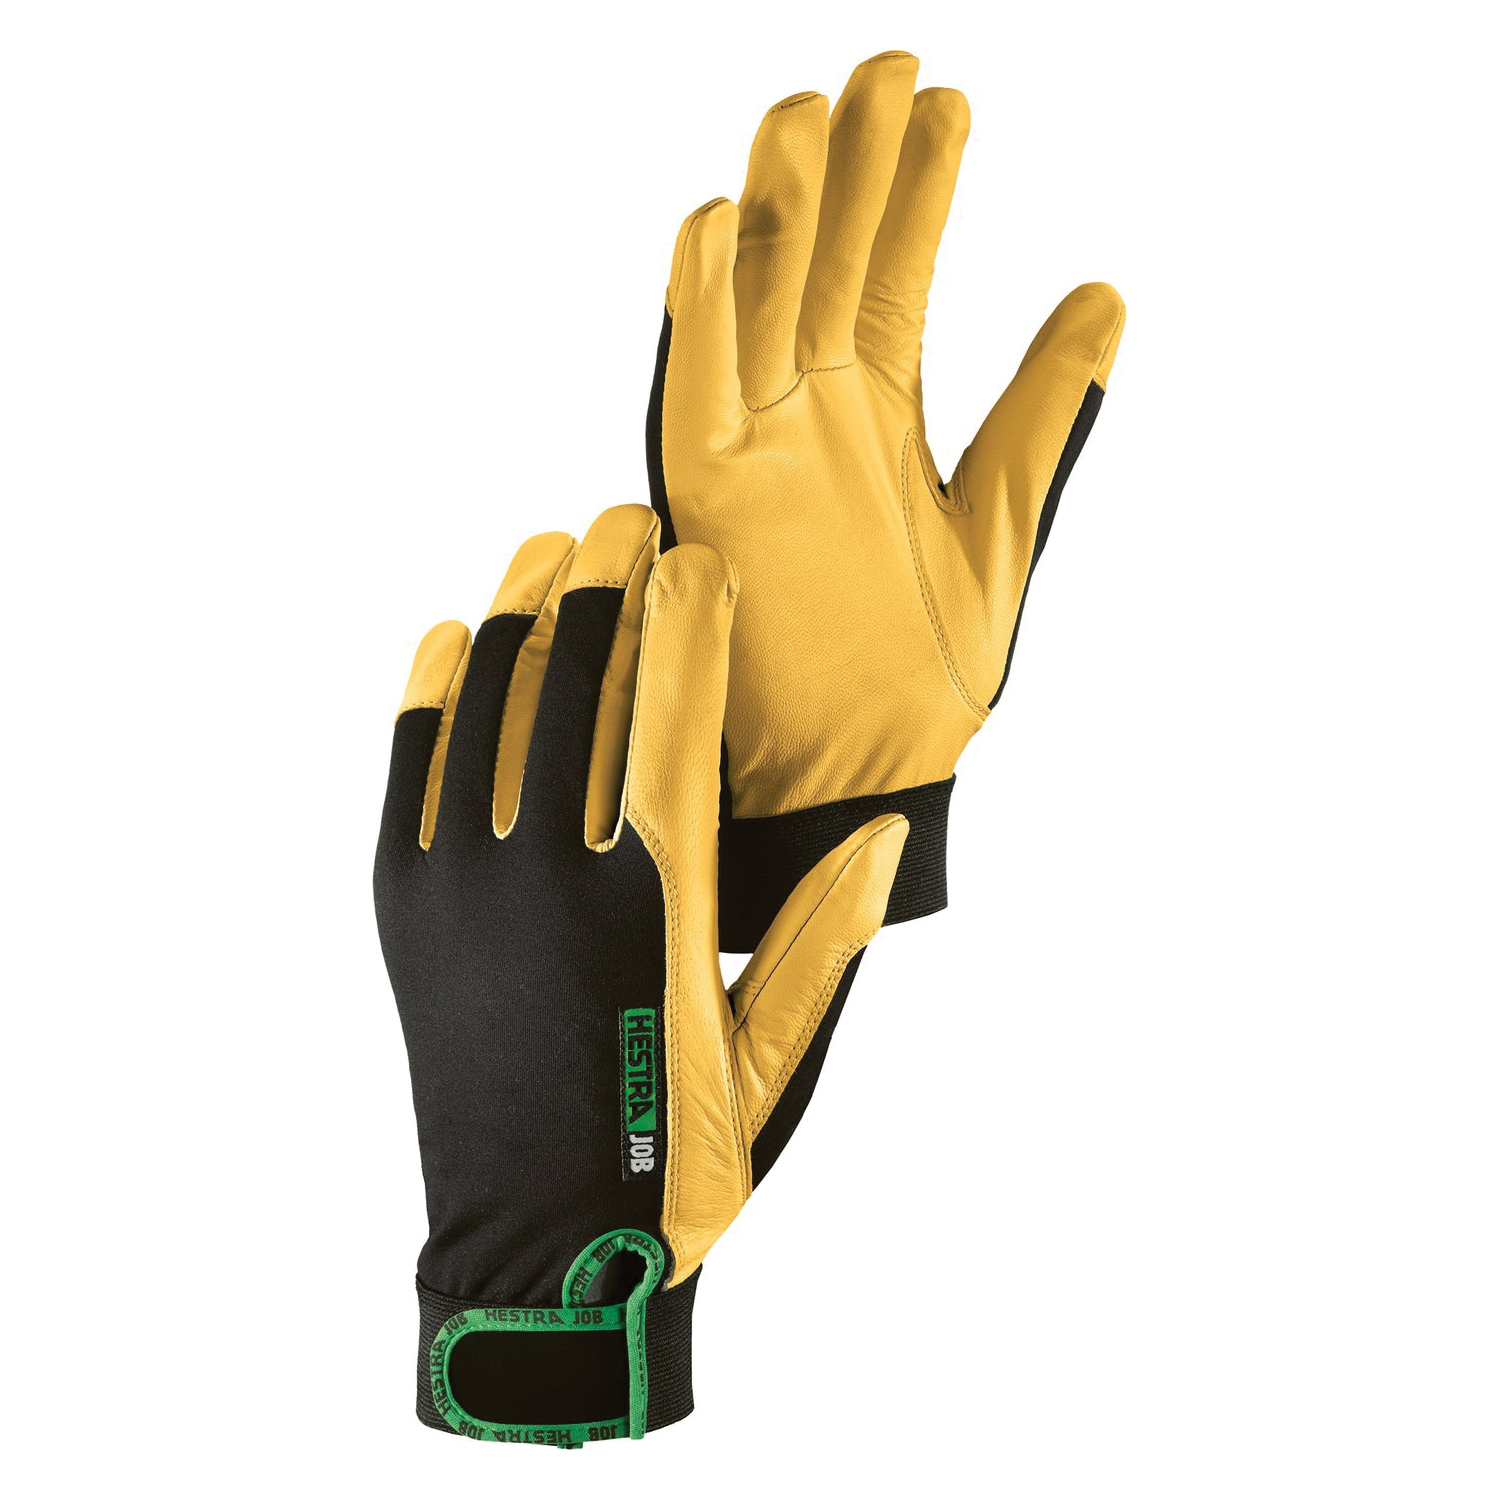 HESTRA JOB Kobolt Golden Flex 73040-701-09 Gloves, Unisex, 9, Adjustable Hook and Loop Cuff, Goatskin Leather, Tan - 1